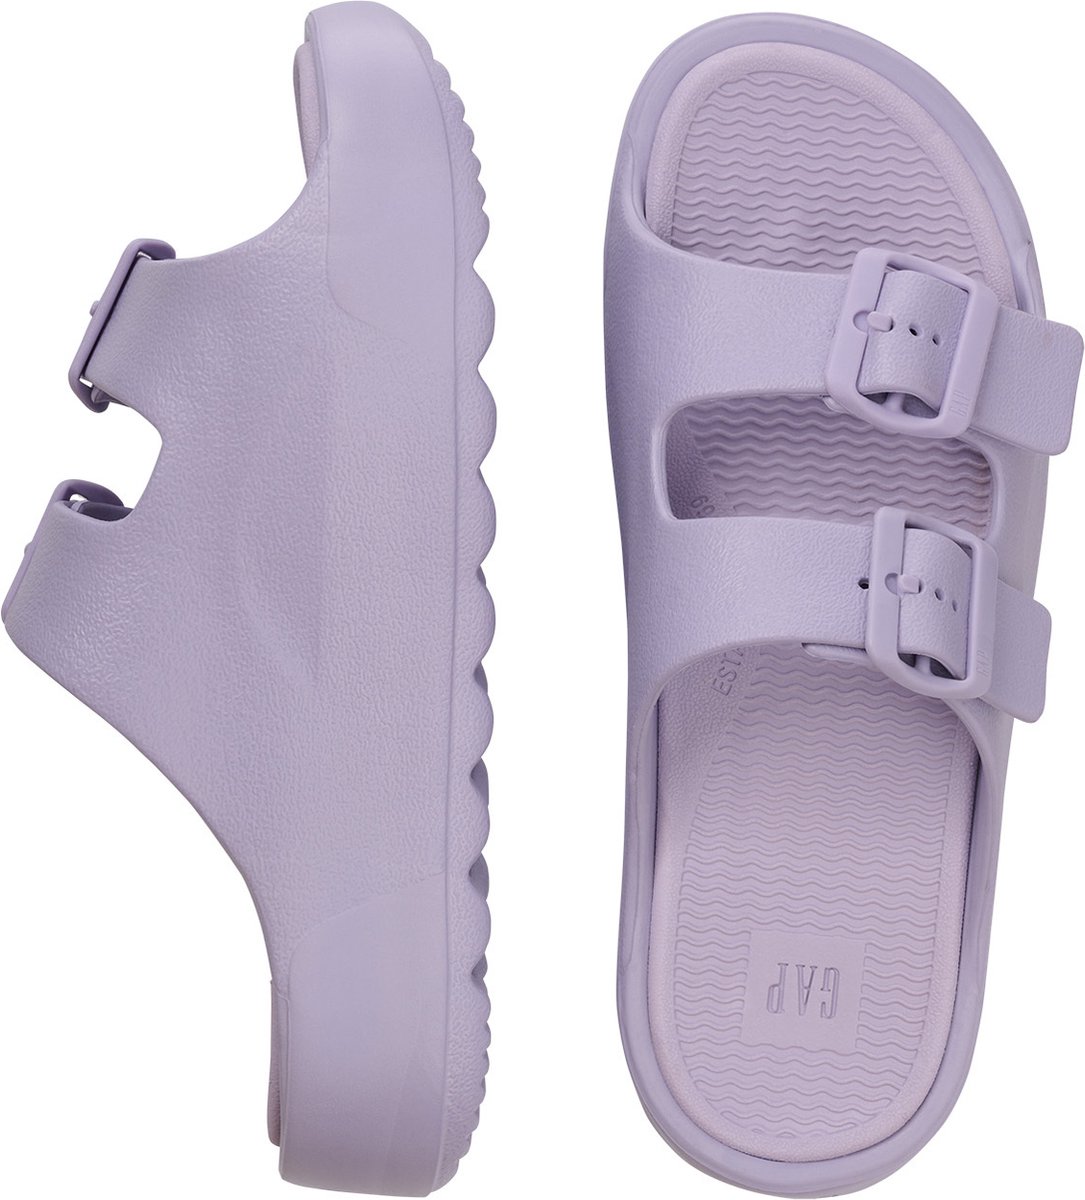 Gap - Flip-Flop/Slide - Female - Lavender - 36 - Slippers